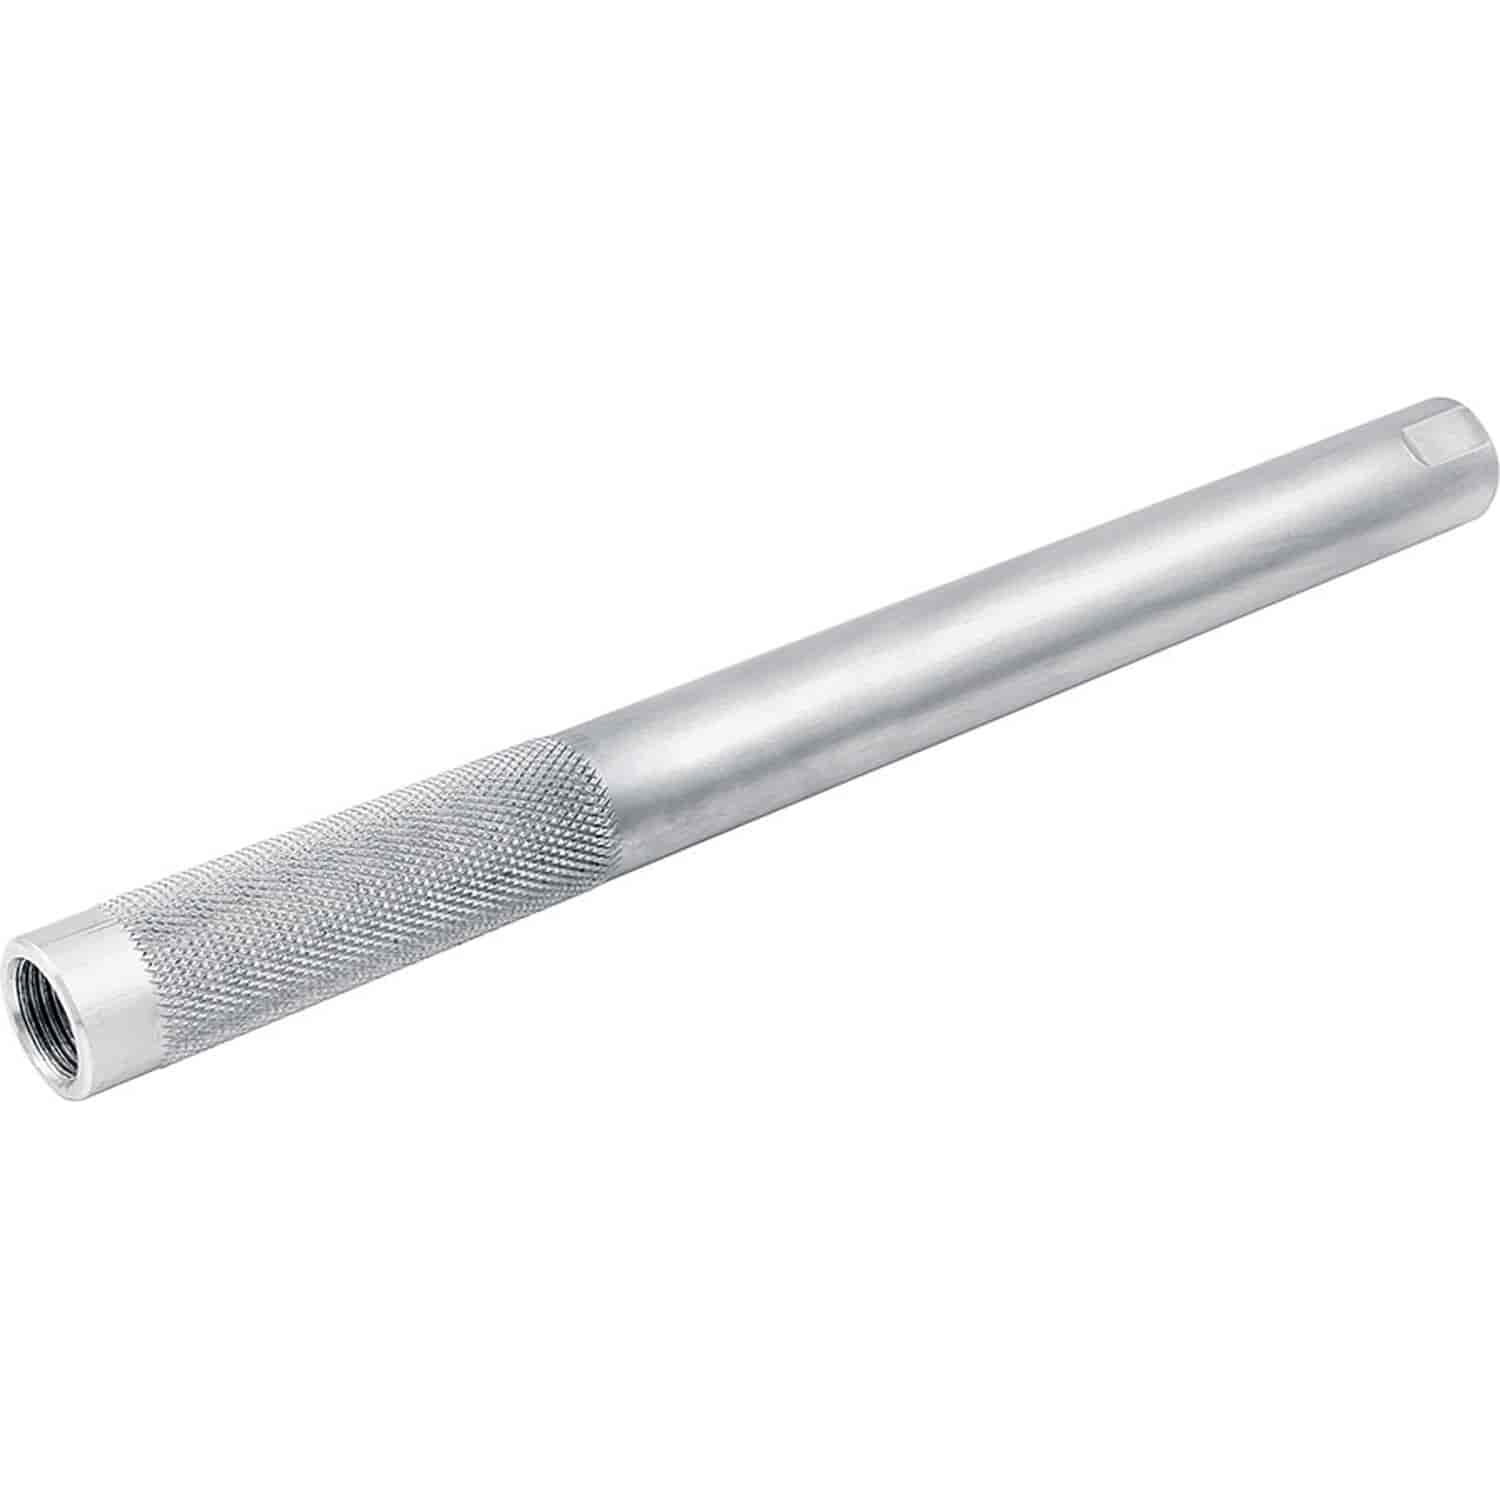 Swedged Aluminum Tie Rod Tube Length: 28"